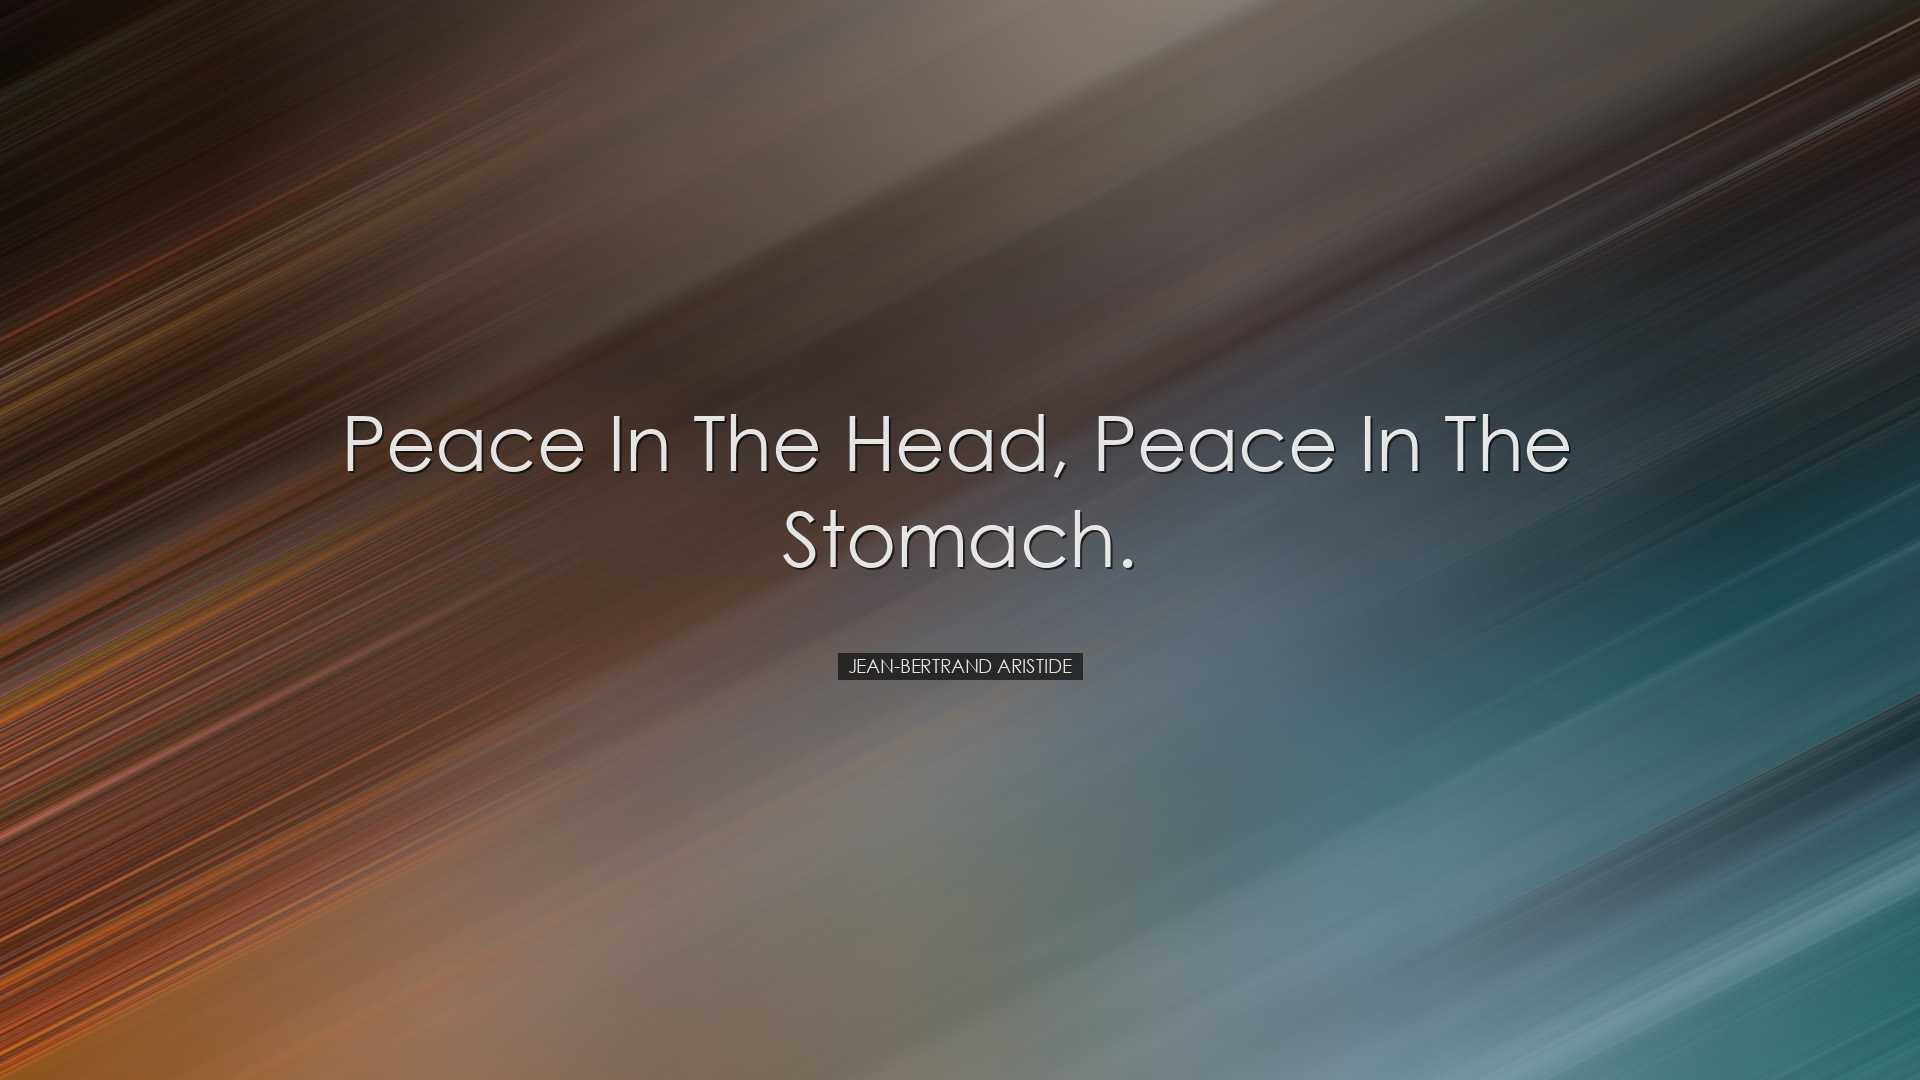 Peace in the head, peace in the stomach. - Jean-Bertrand Aristide